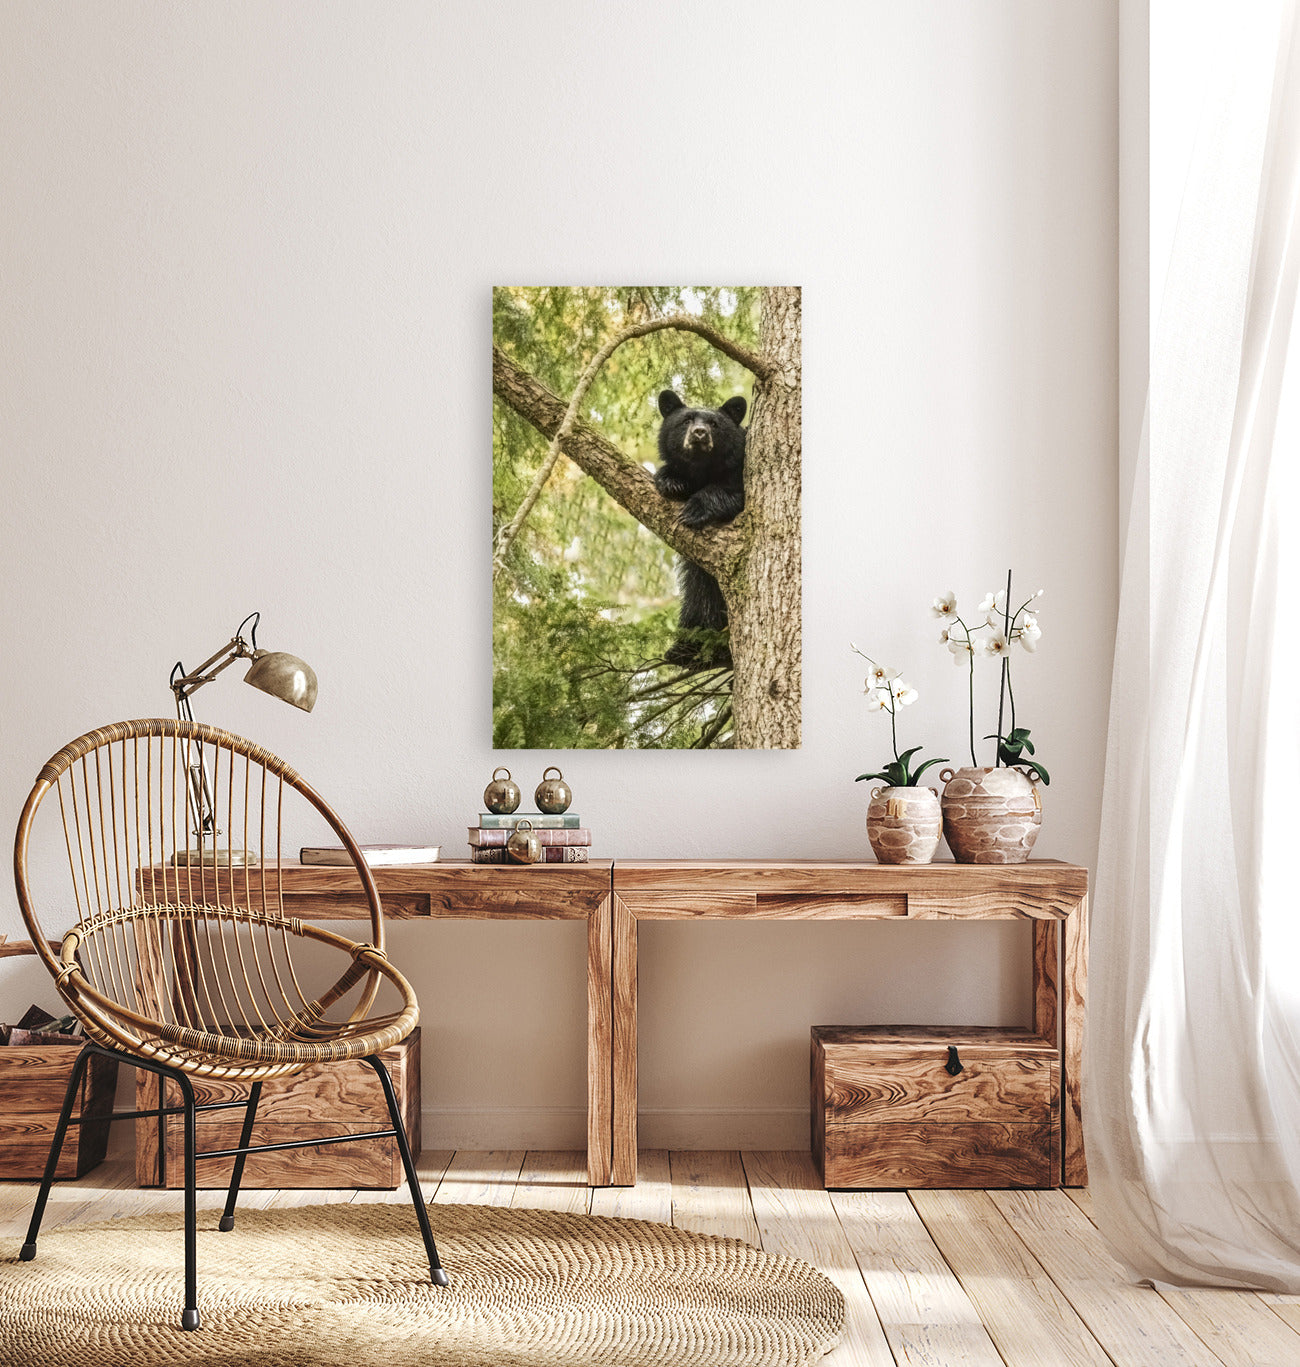 Black Bear Cub (portrait) 24x36"